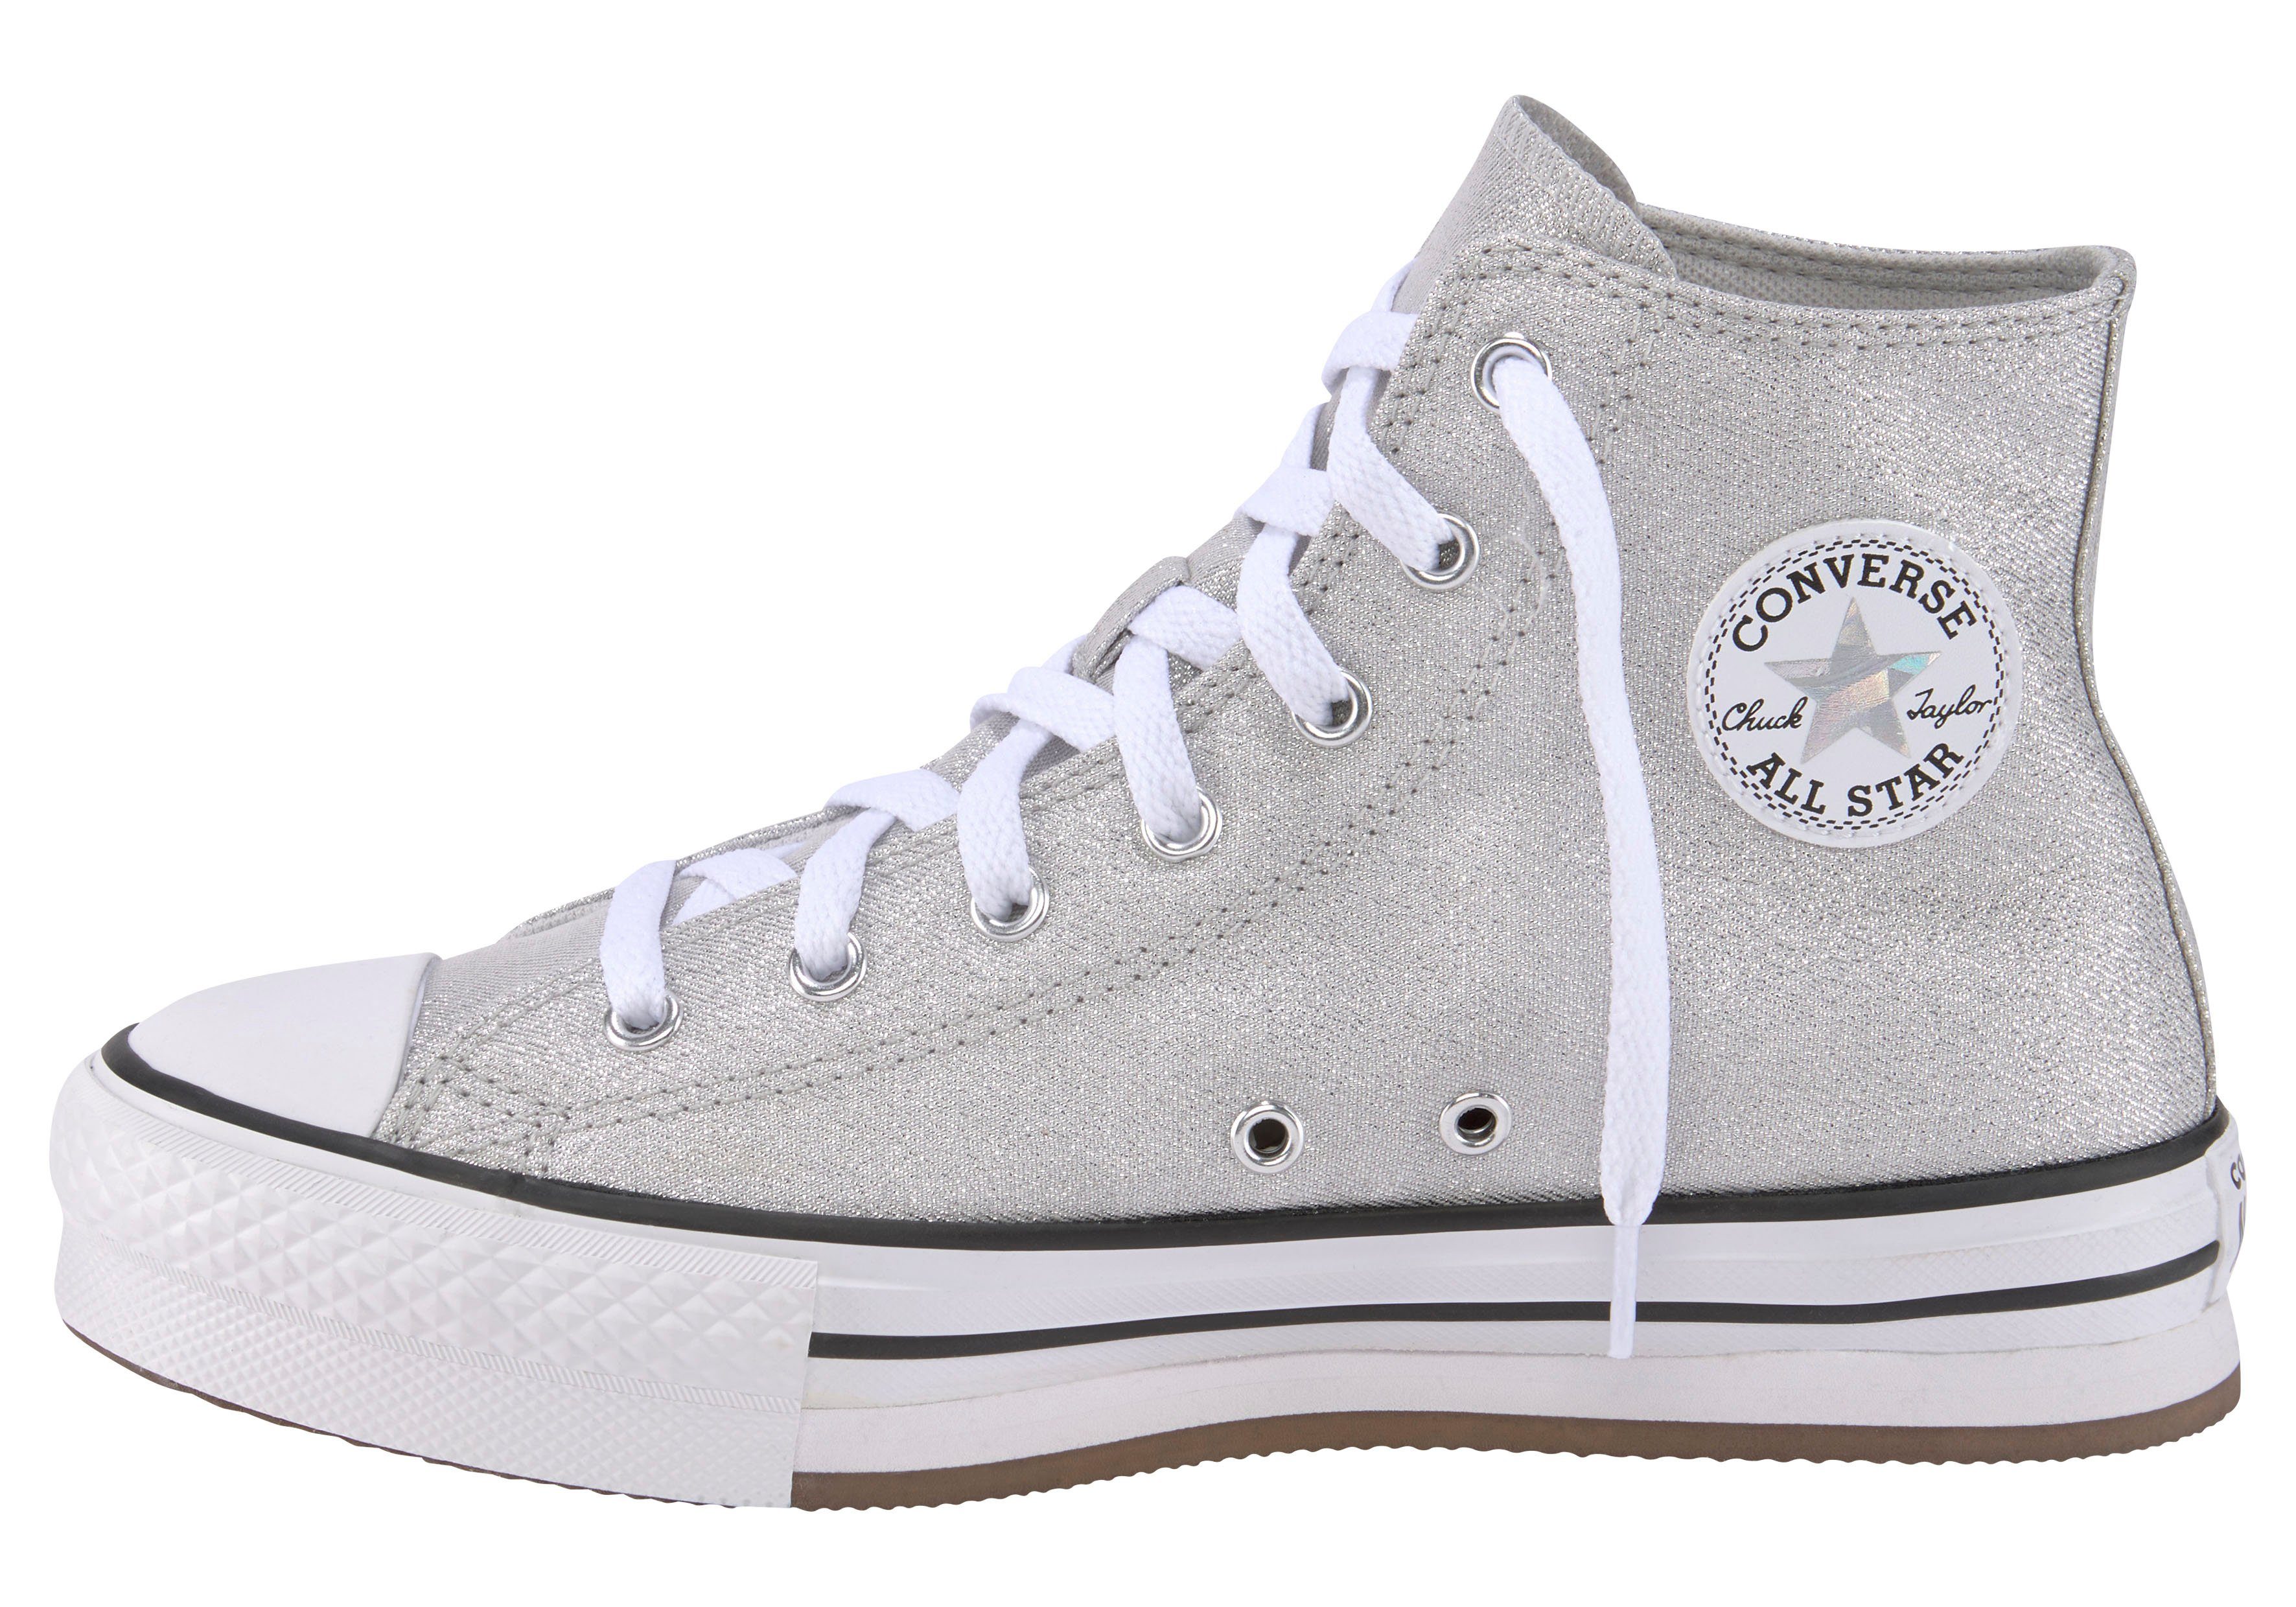 LIFT TAYLOR ALL EVA Sneaker PLAT STAR CHUCK Converse